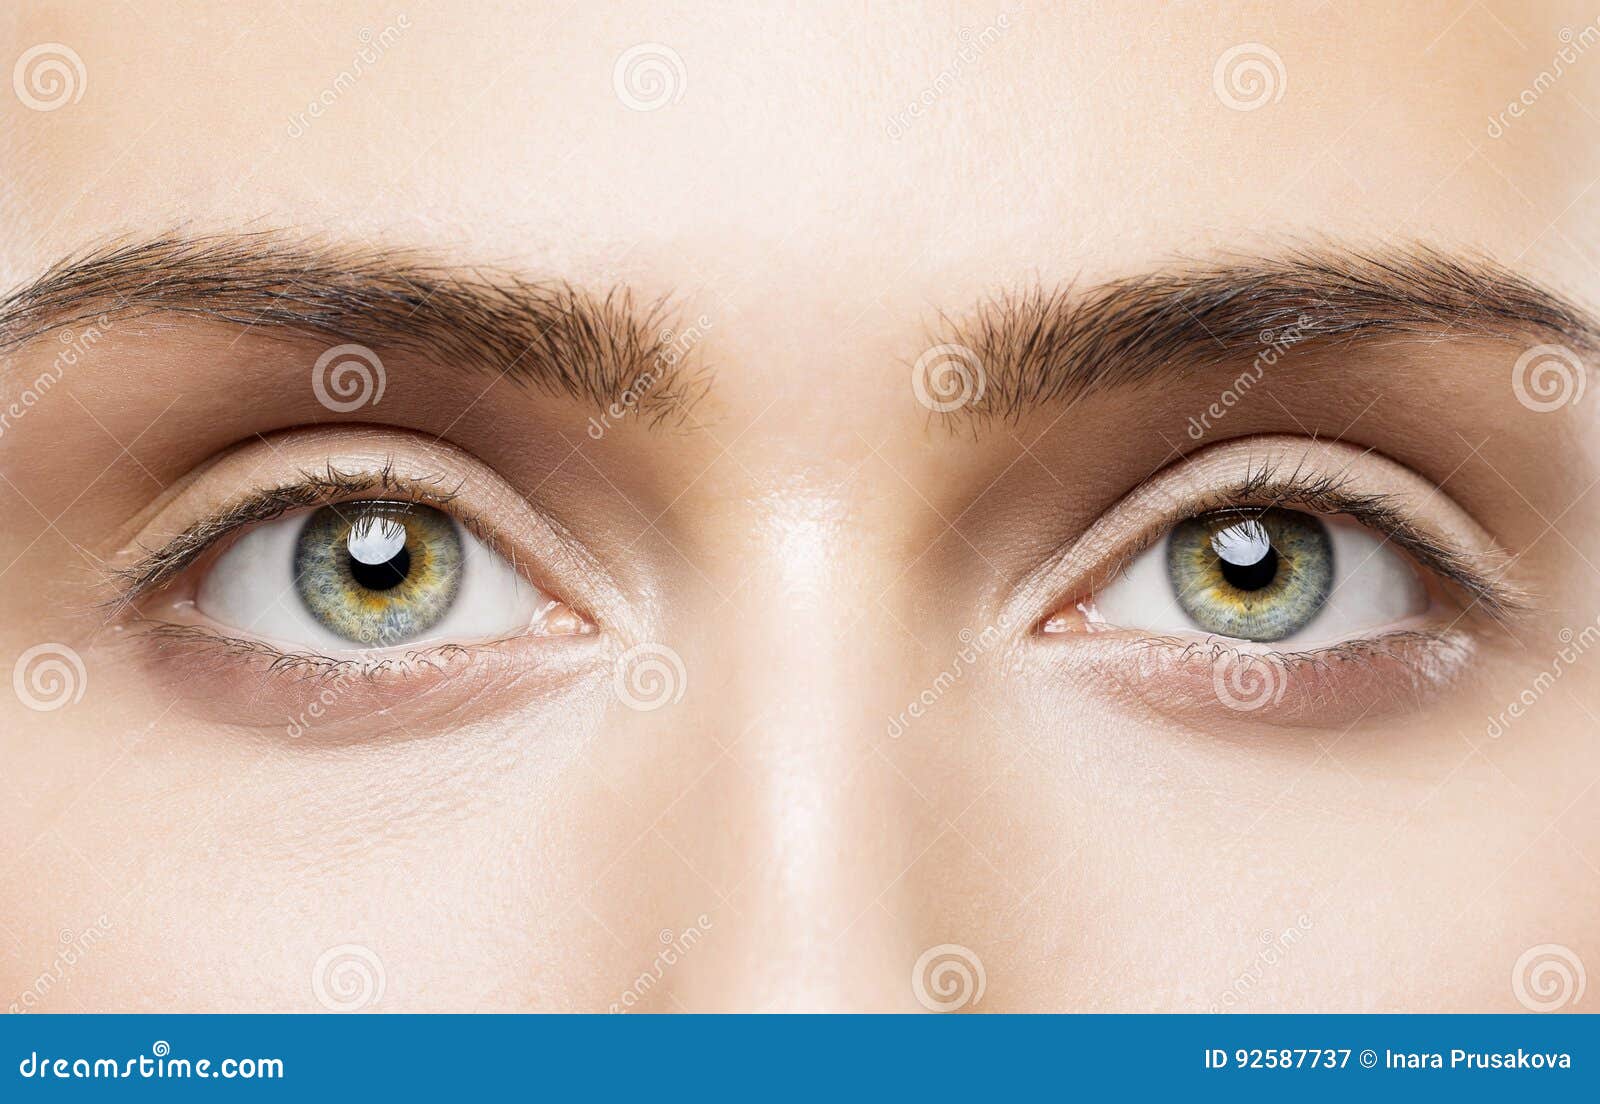 woman eyes close up, natural makeup, young girl beauty face, eye